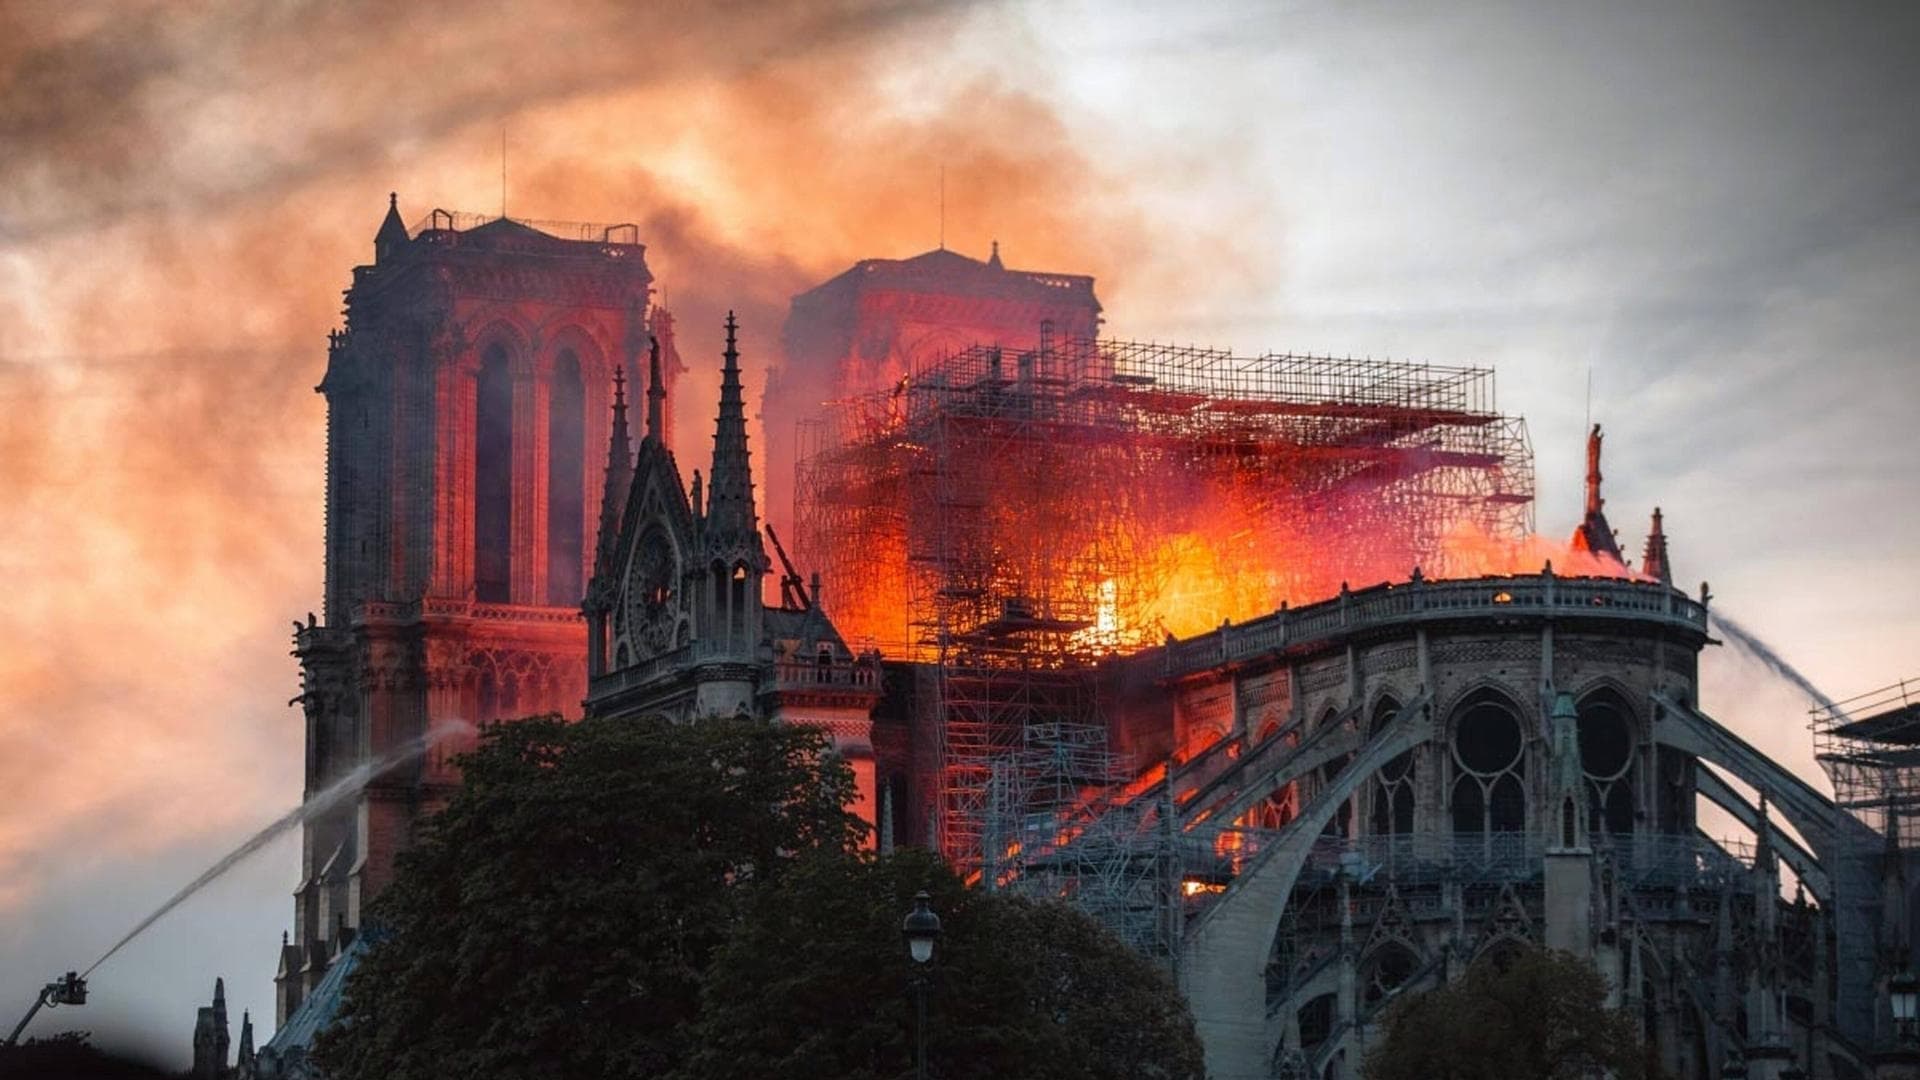 Notre-Dame: Desastre en París